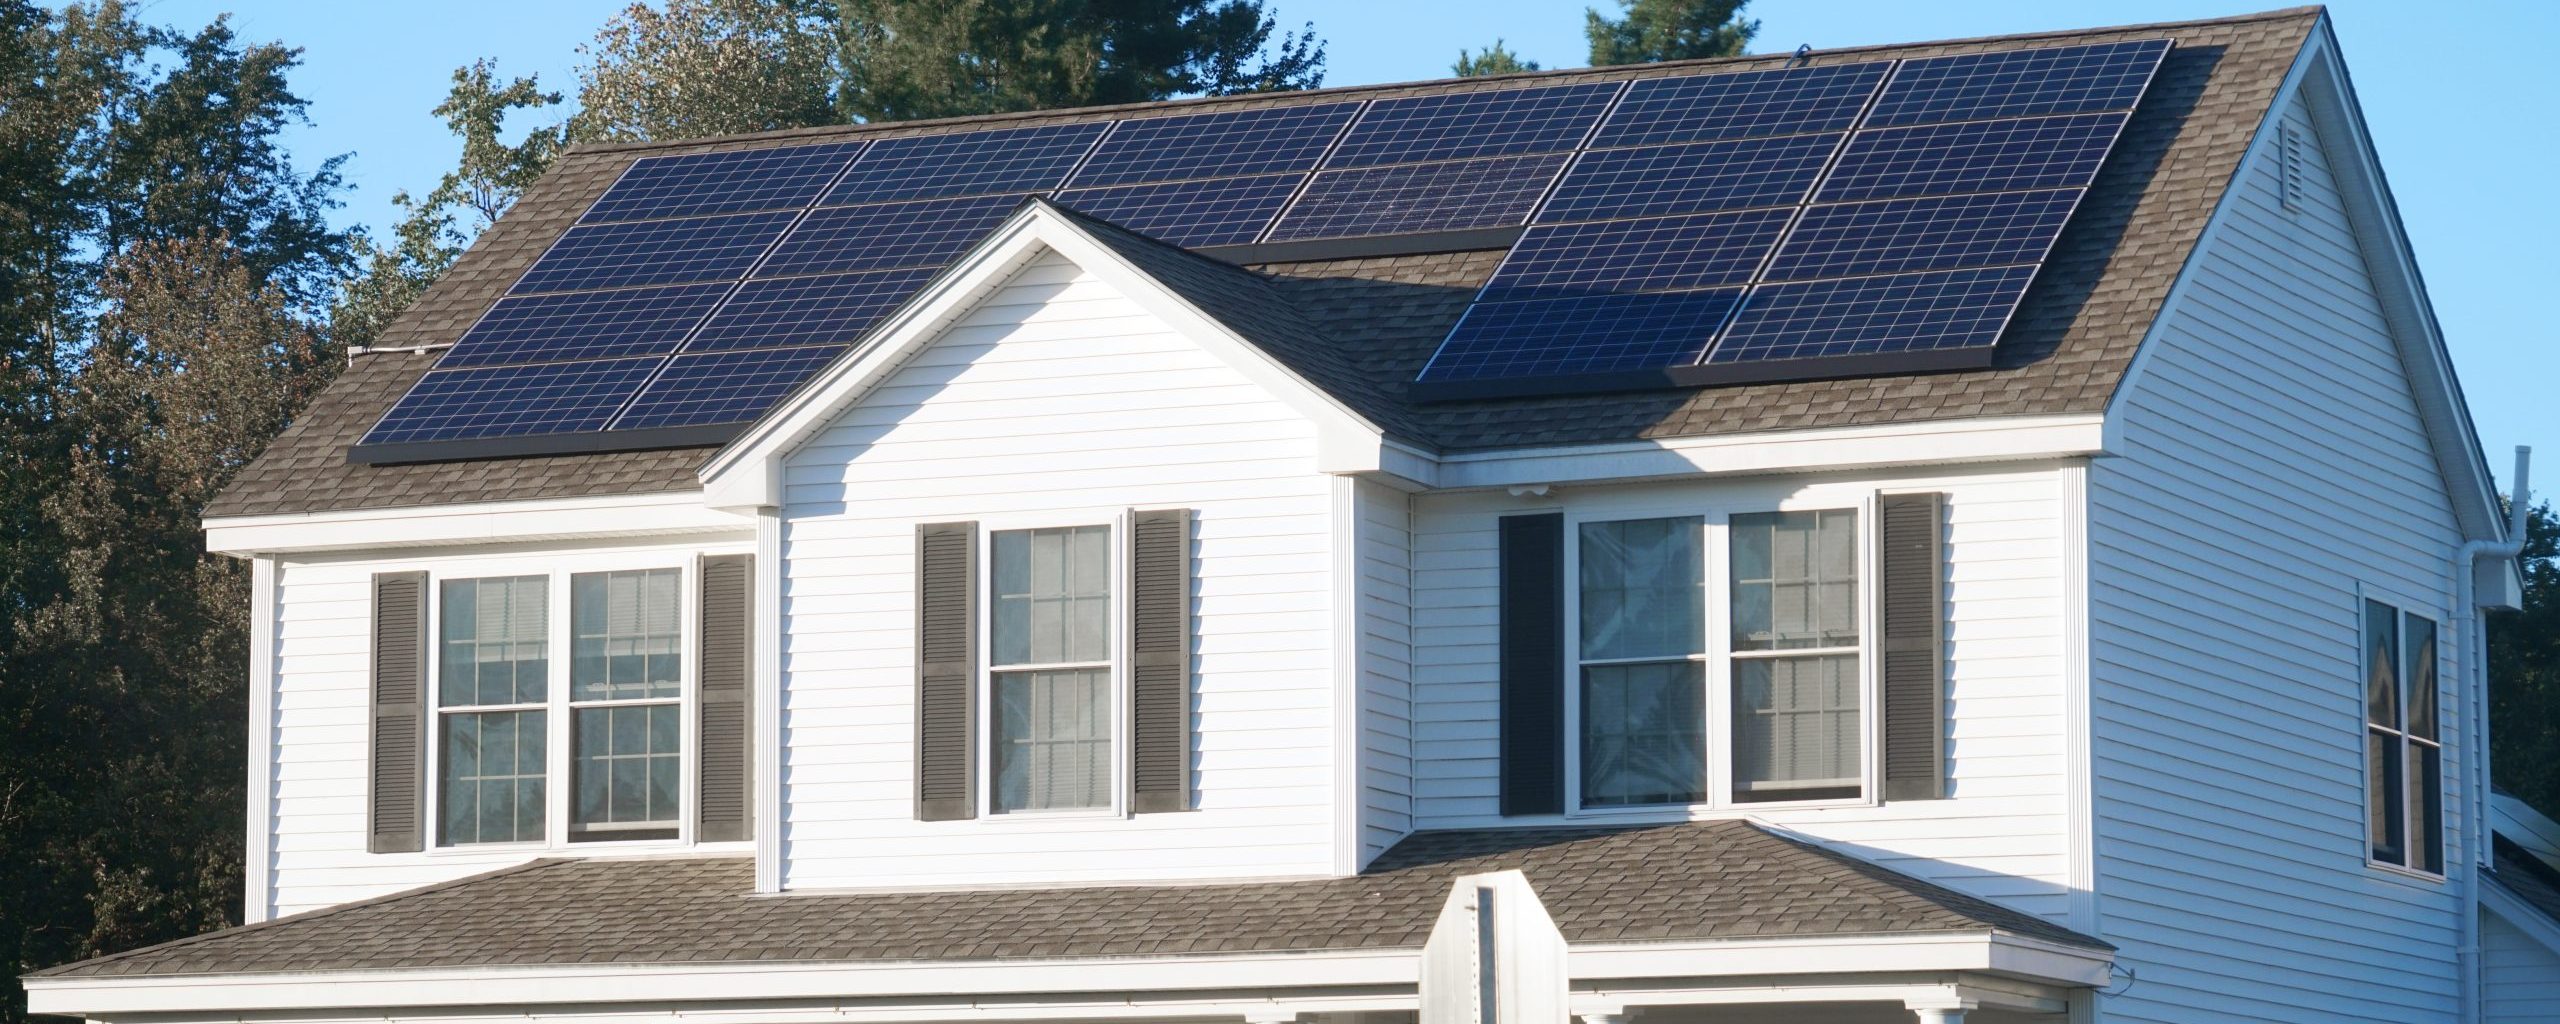 A white house using solar power